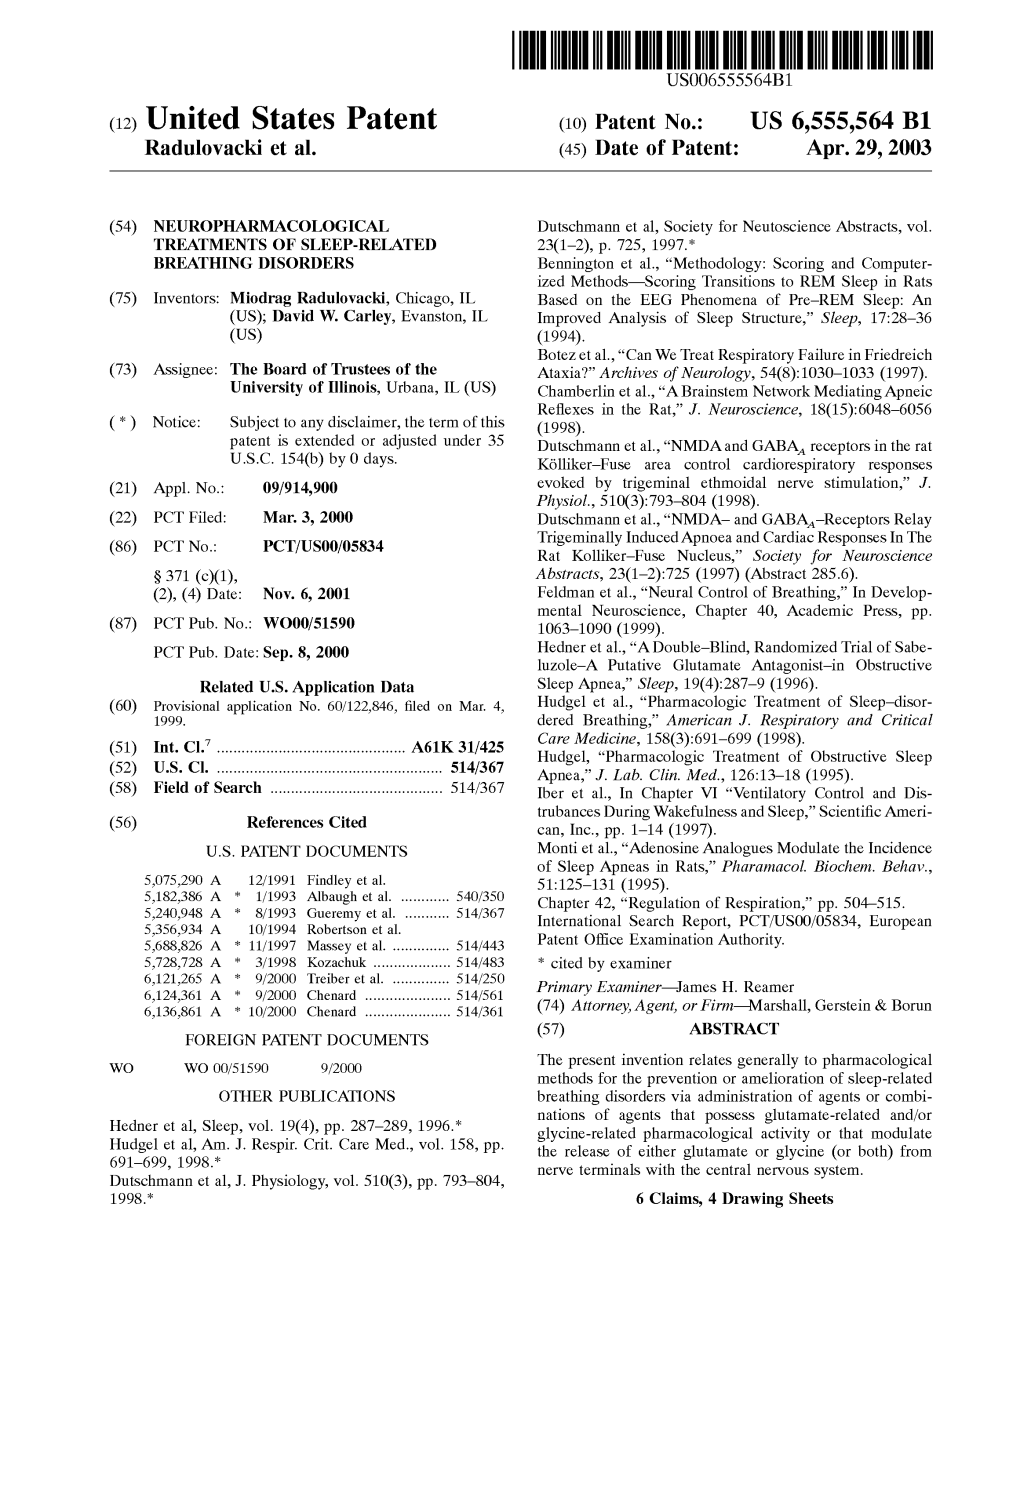 (12) United States Patent (10) Patent No.: US 6,555,564 B1 Radulovacki Et Al